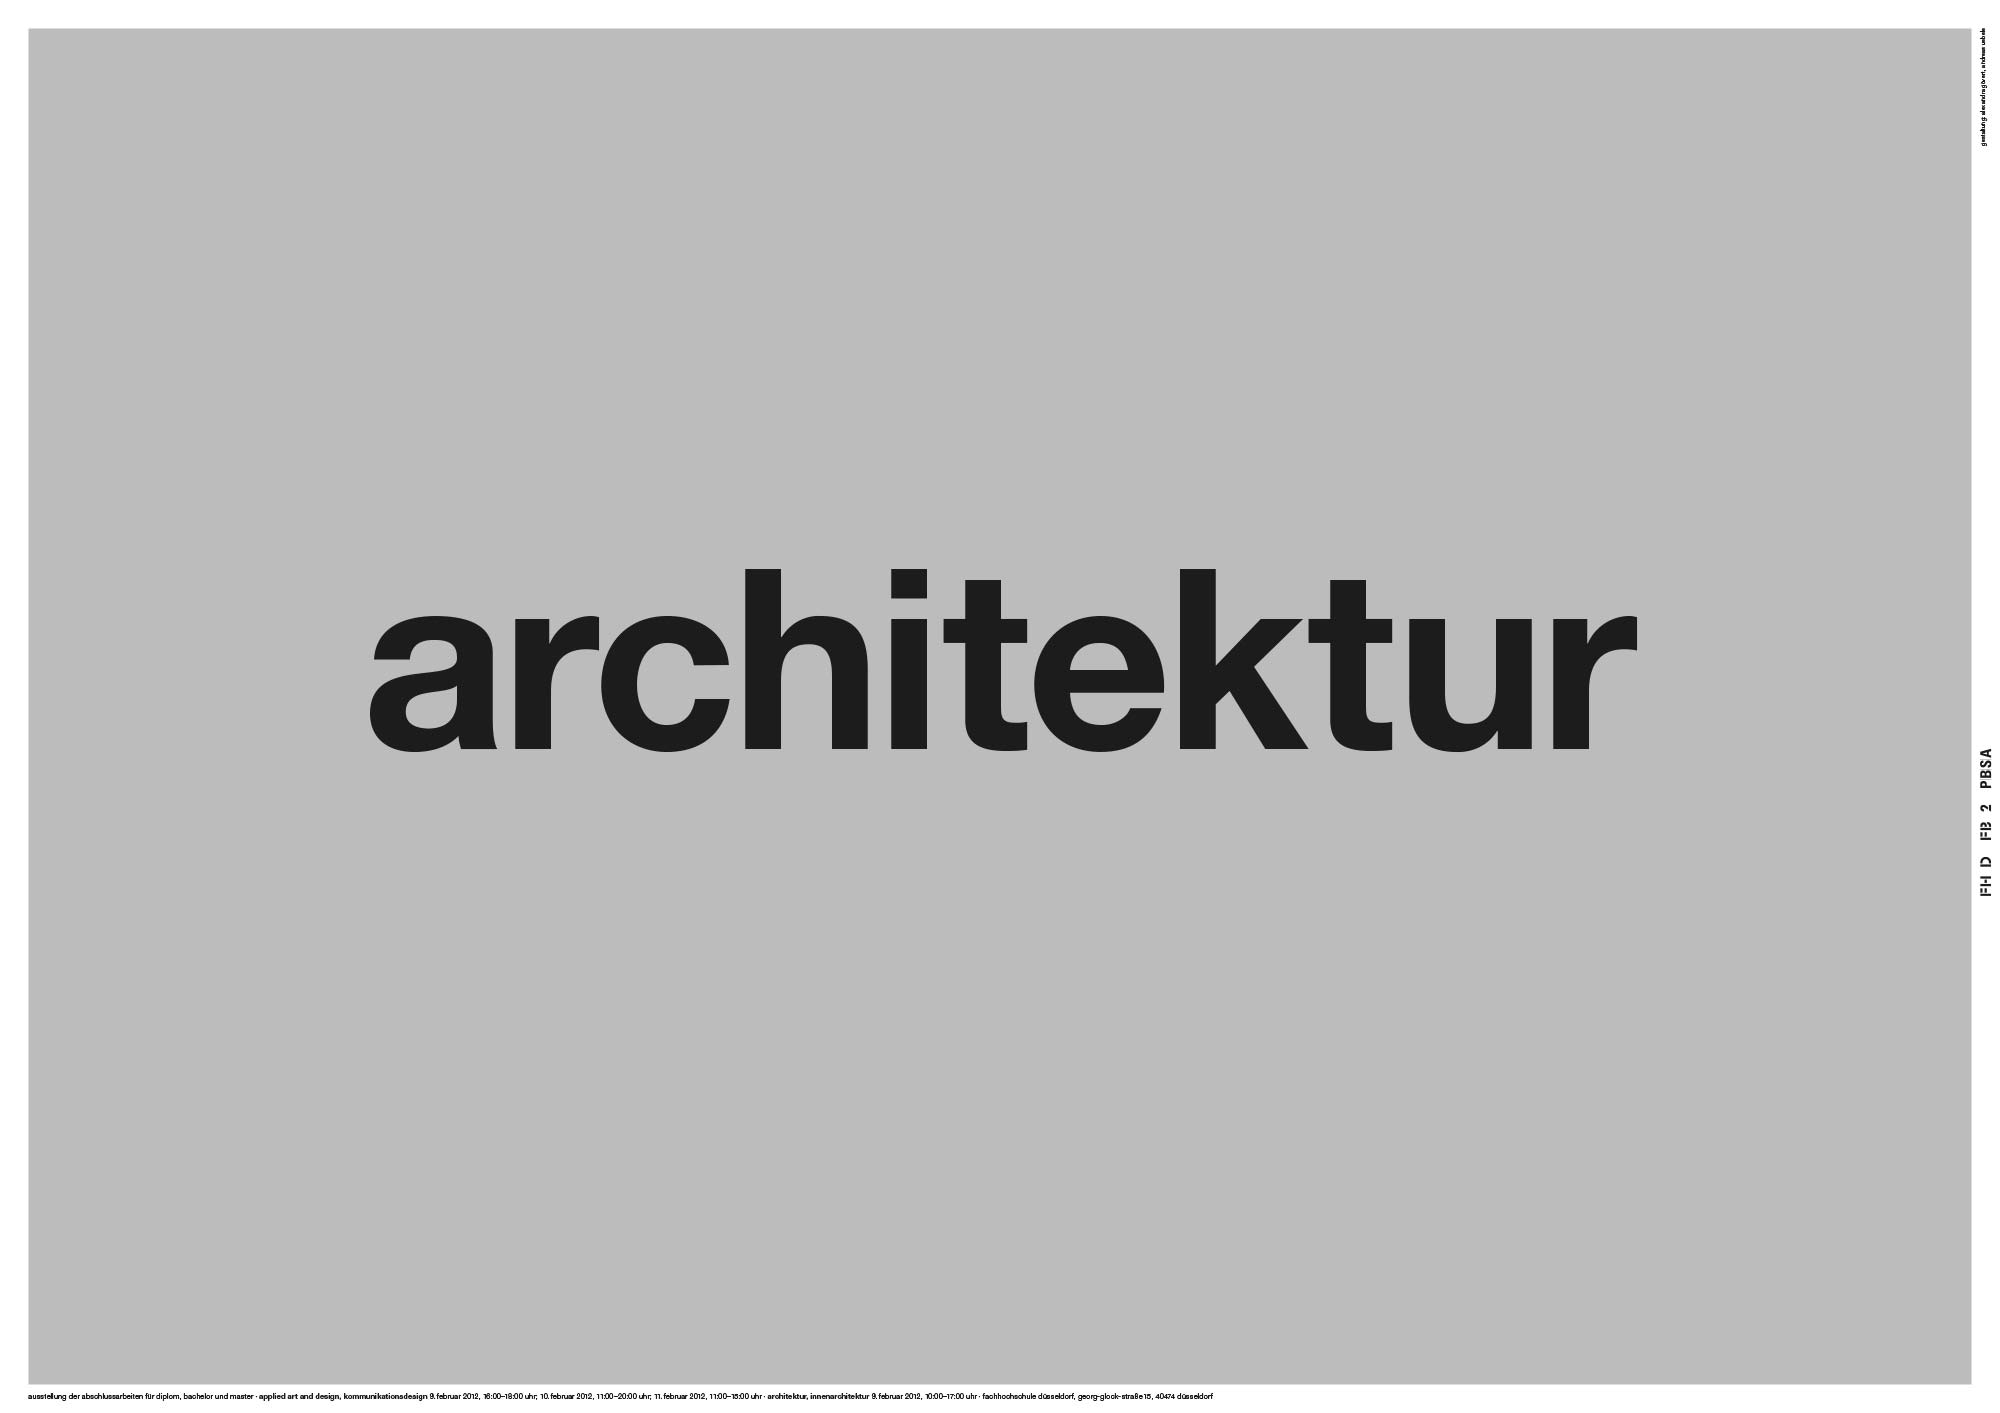 Gestaltet: Andreas Uebele, Alexandra Gövert, Titel: architektur, Jahr: 2012